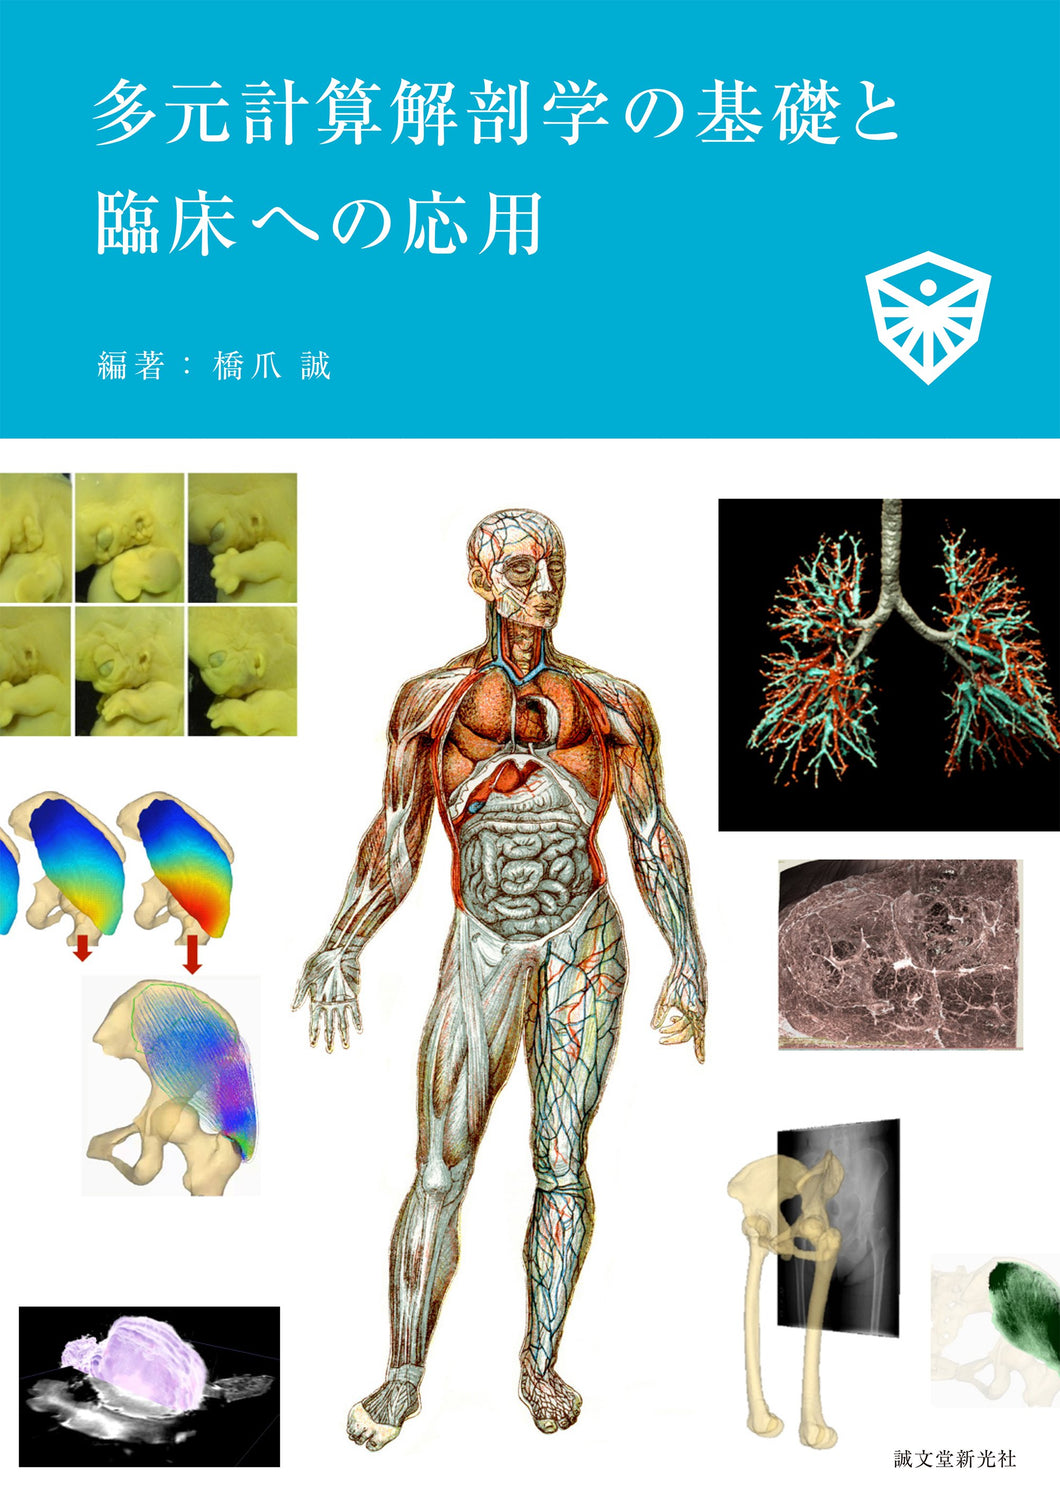 Basics of multidimensional computational anatomy and its clinical application